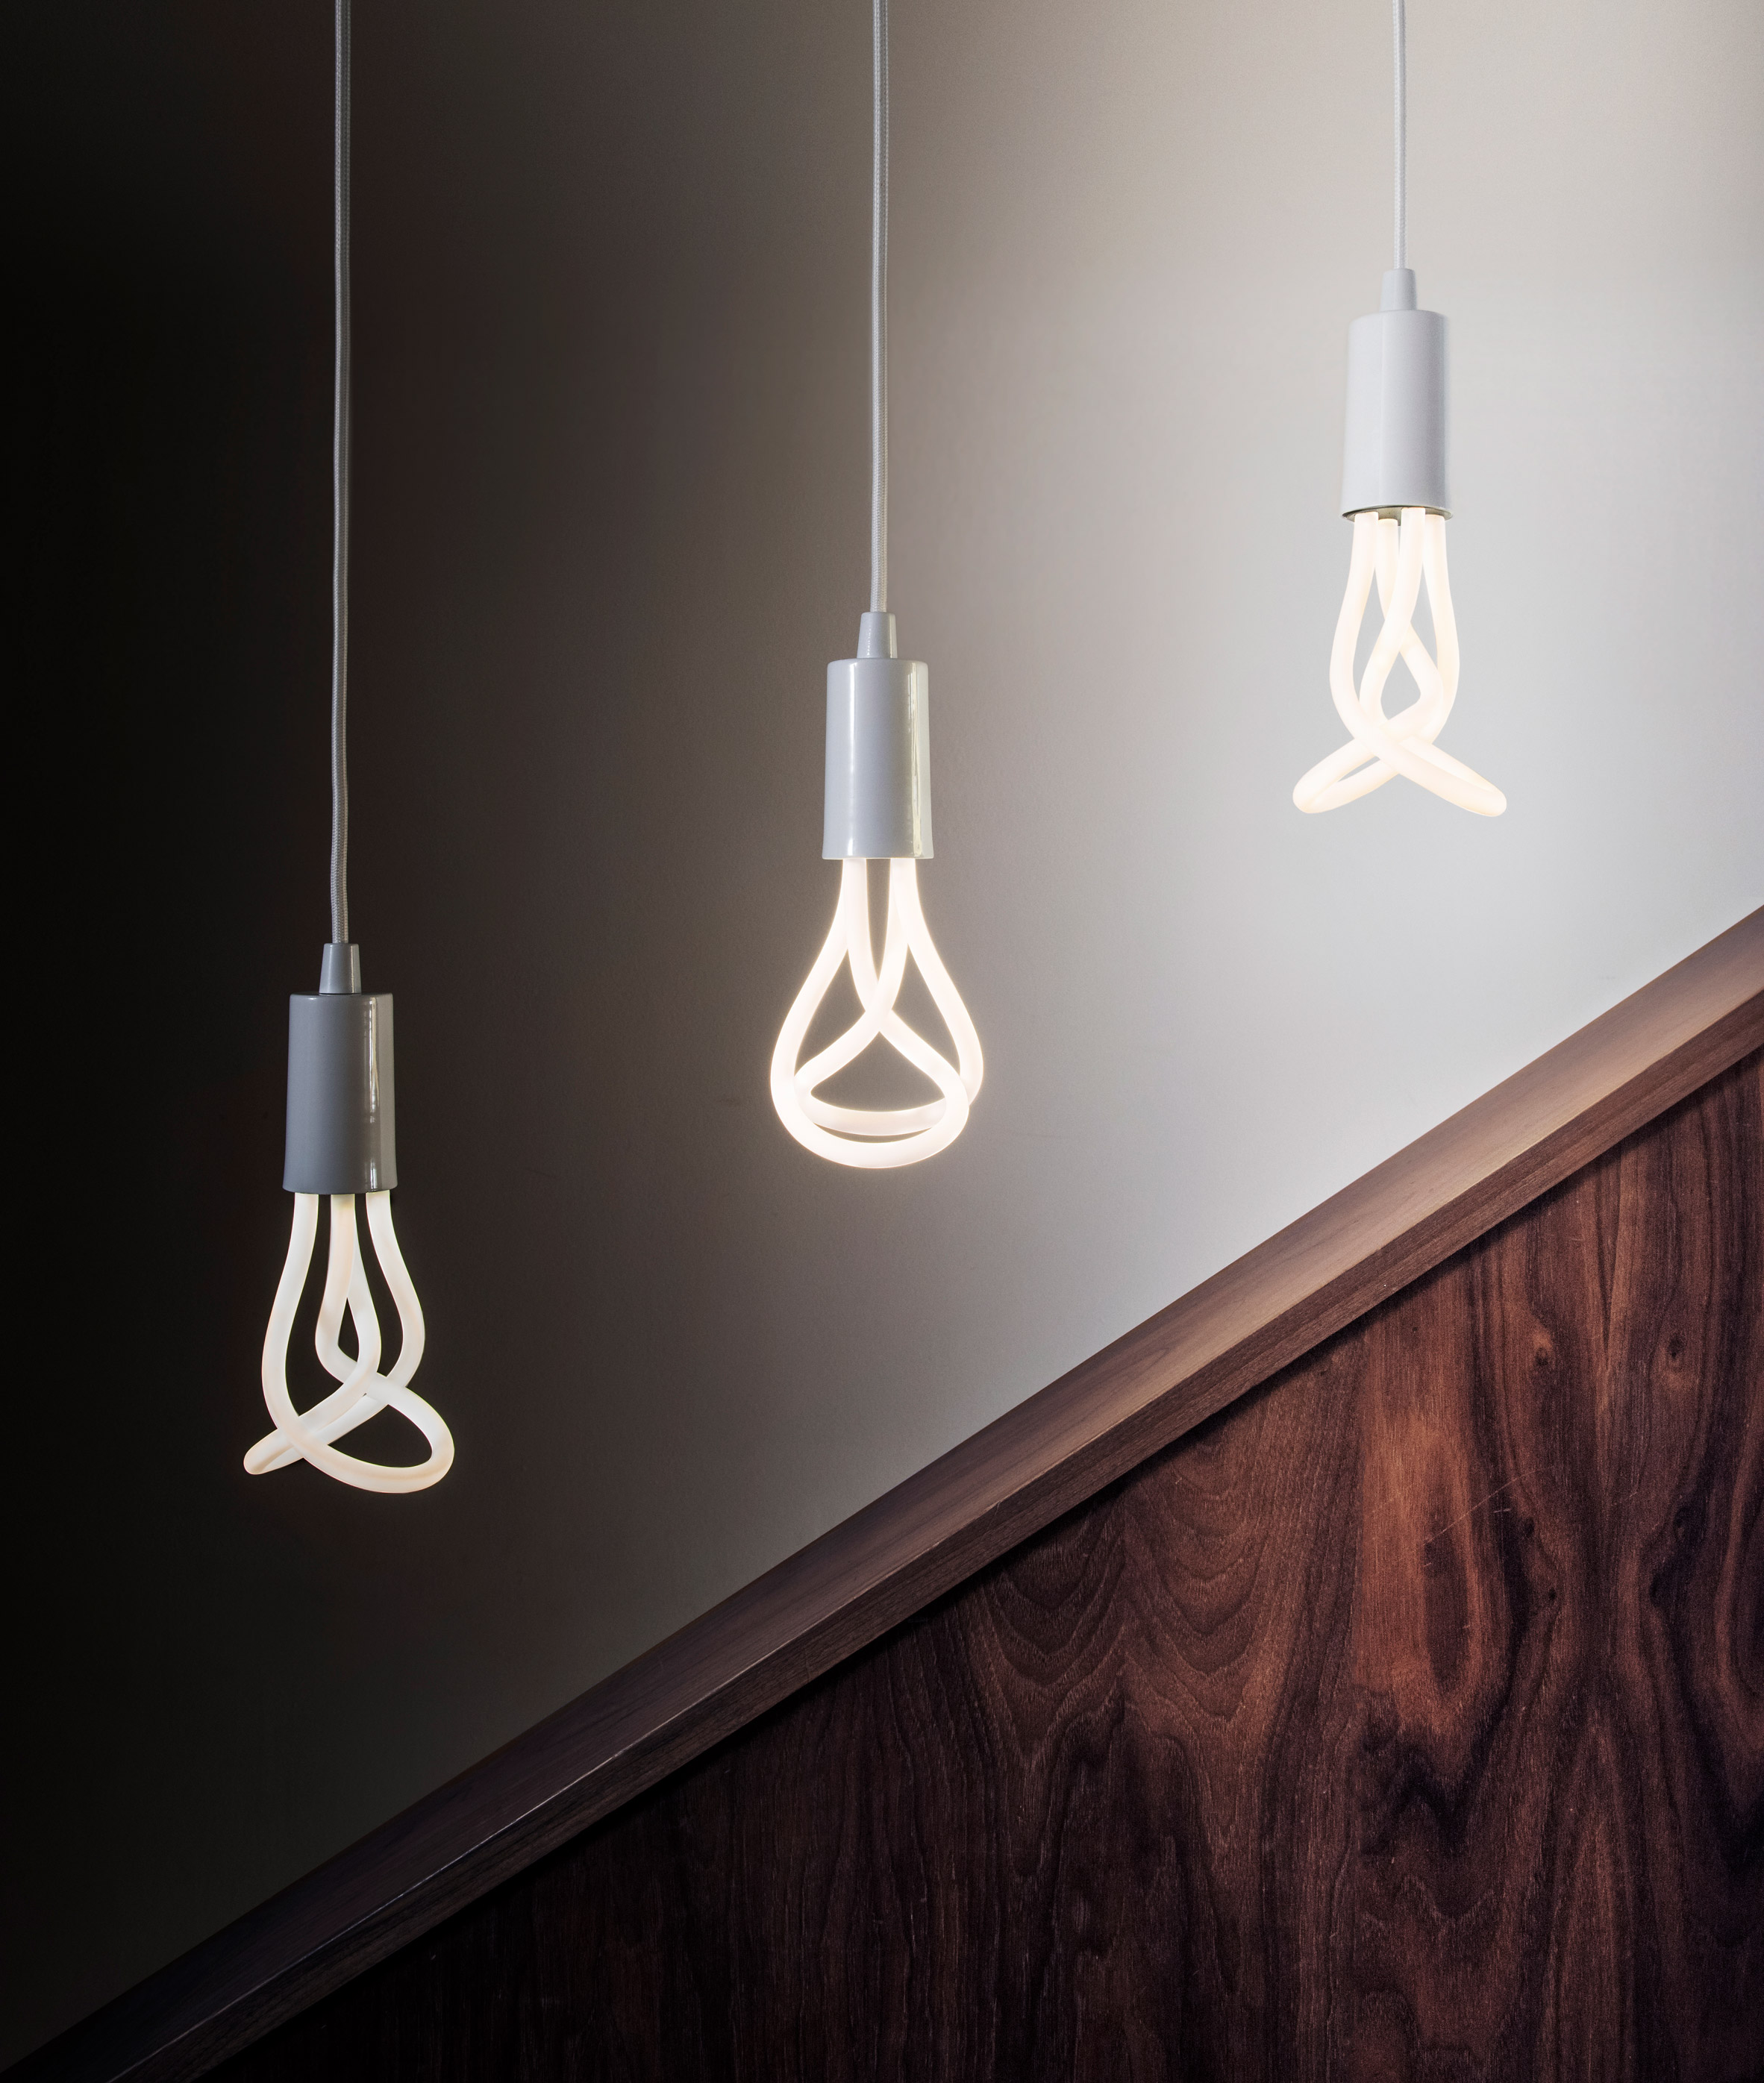 Plumen creates LED version of Design of the Year-winning 001 light bulb